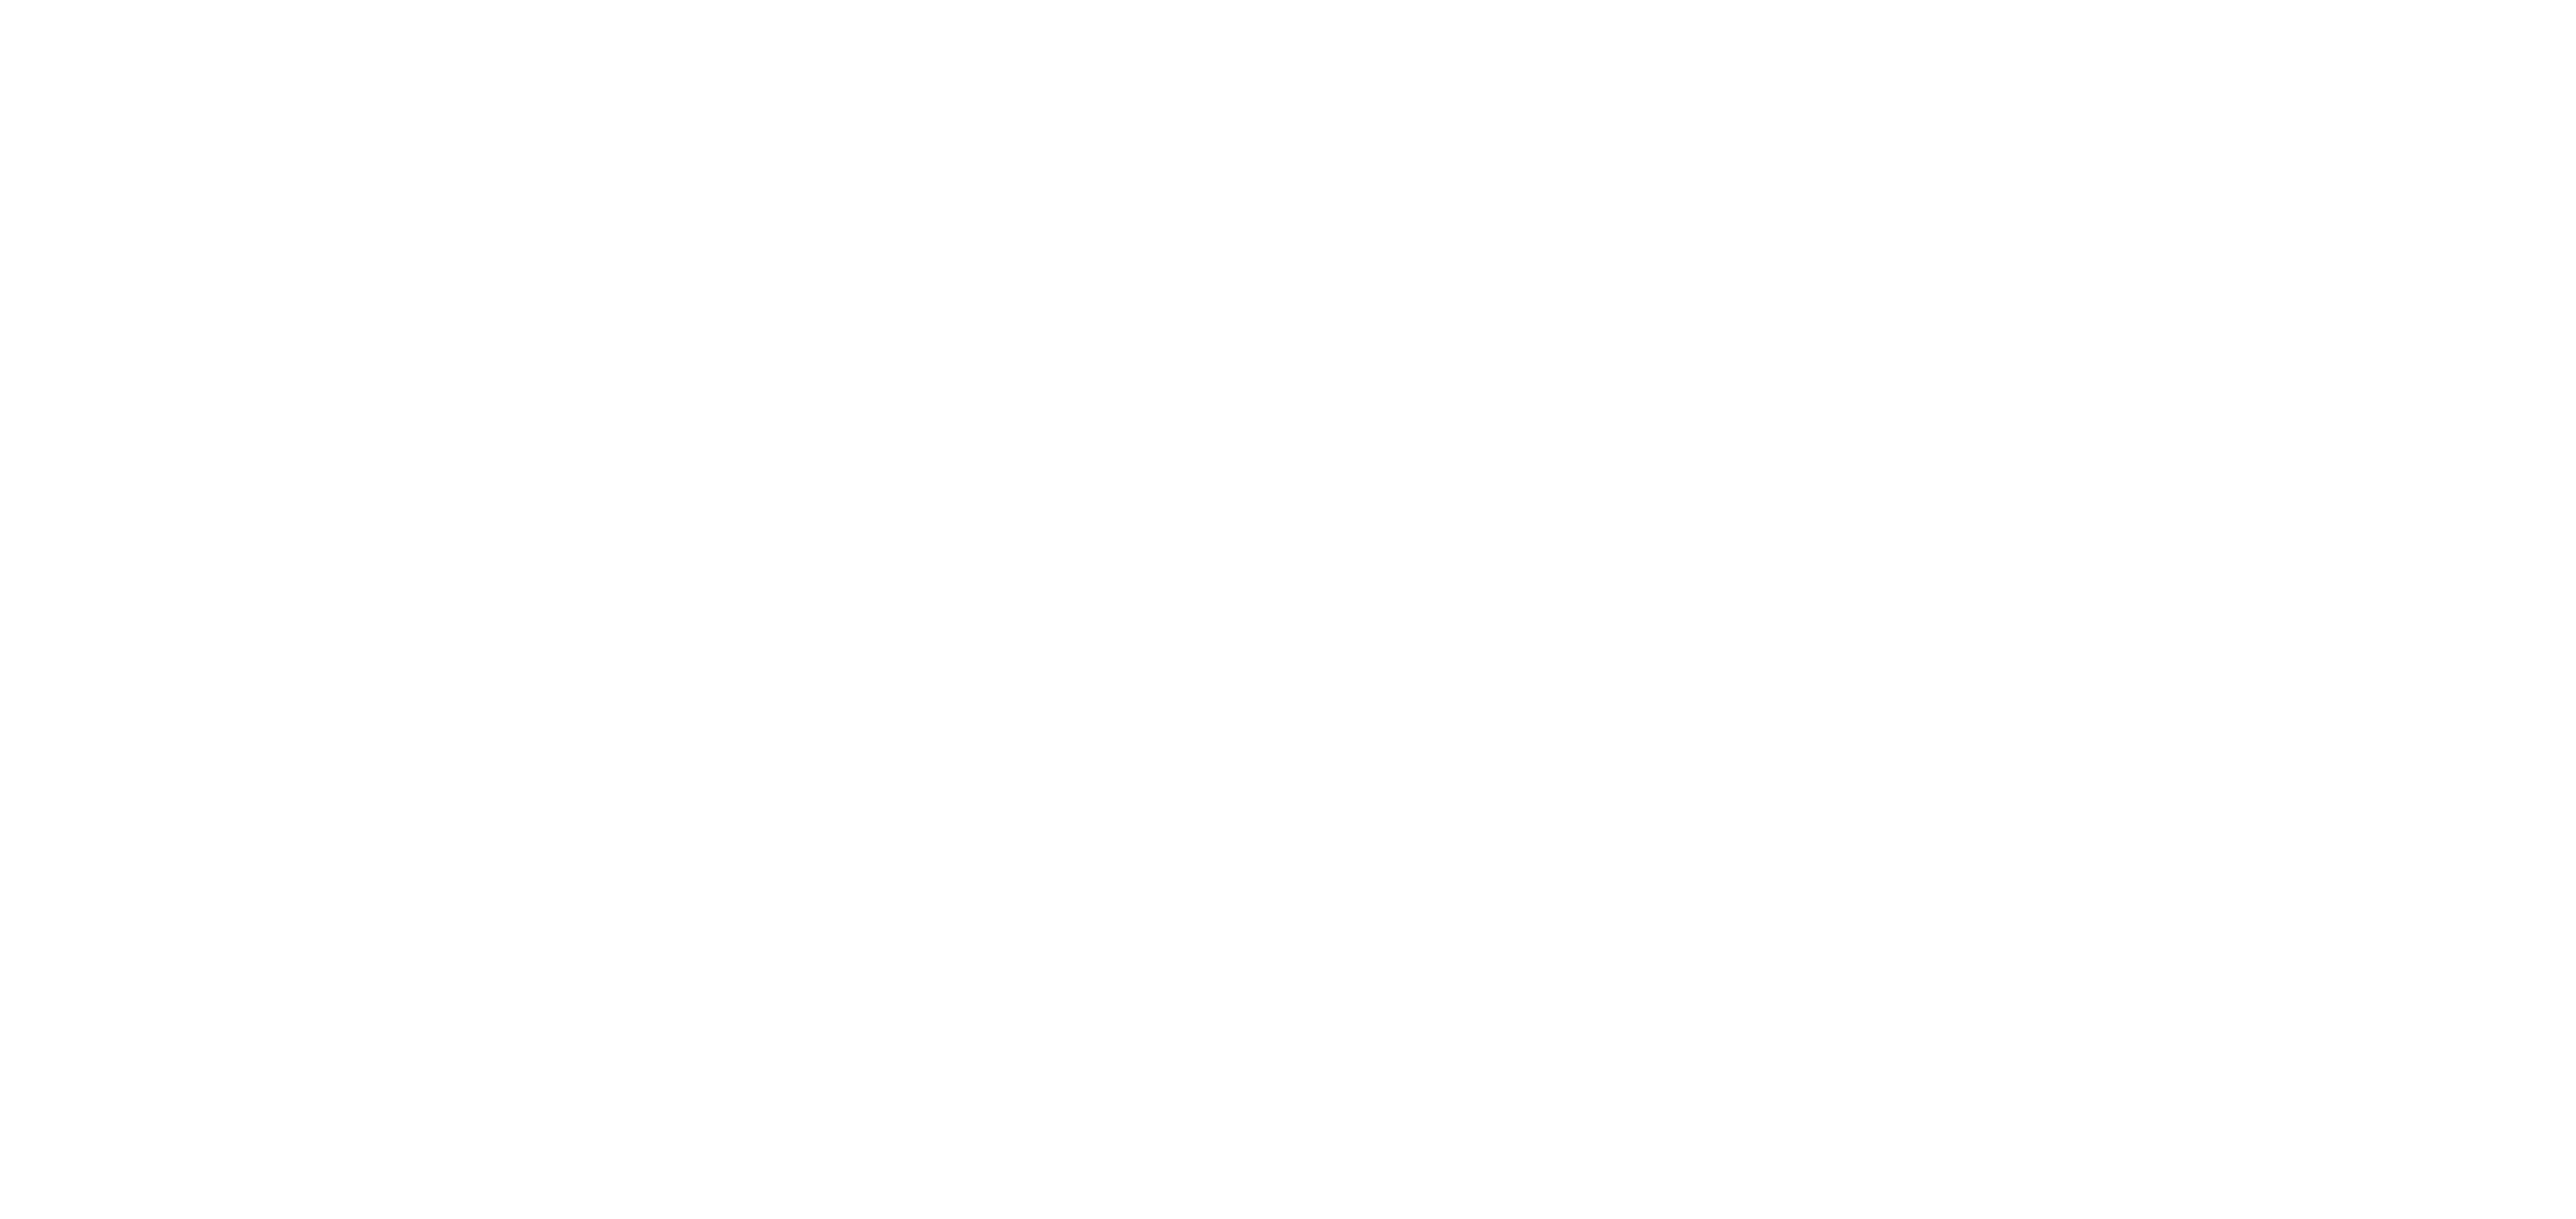 Winchester Securities